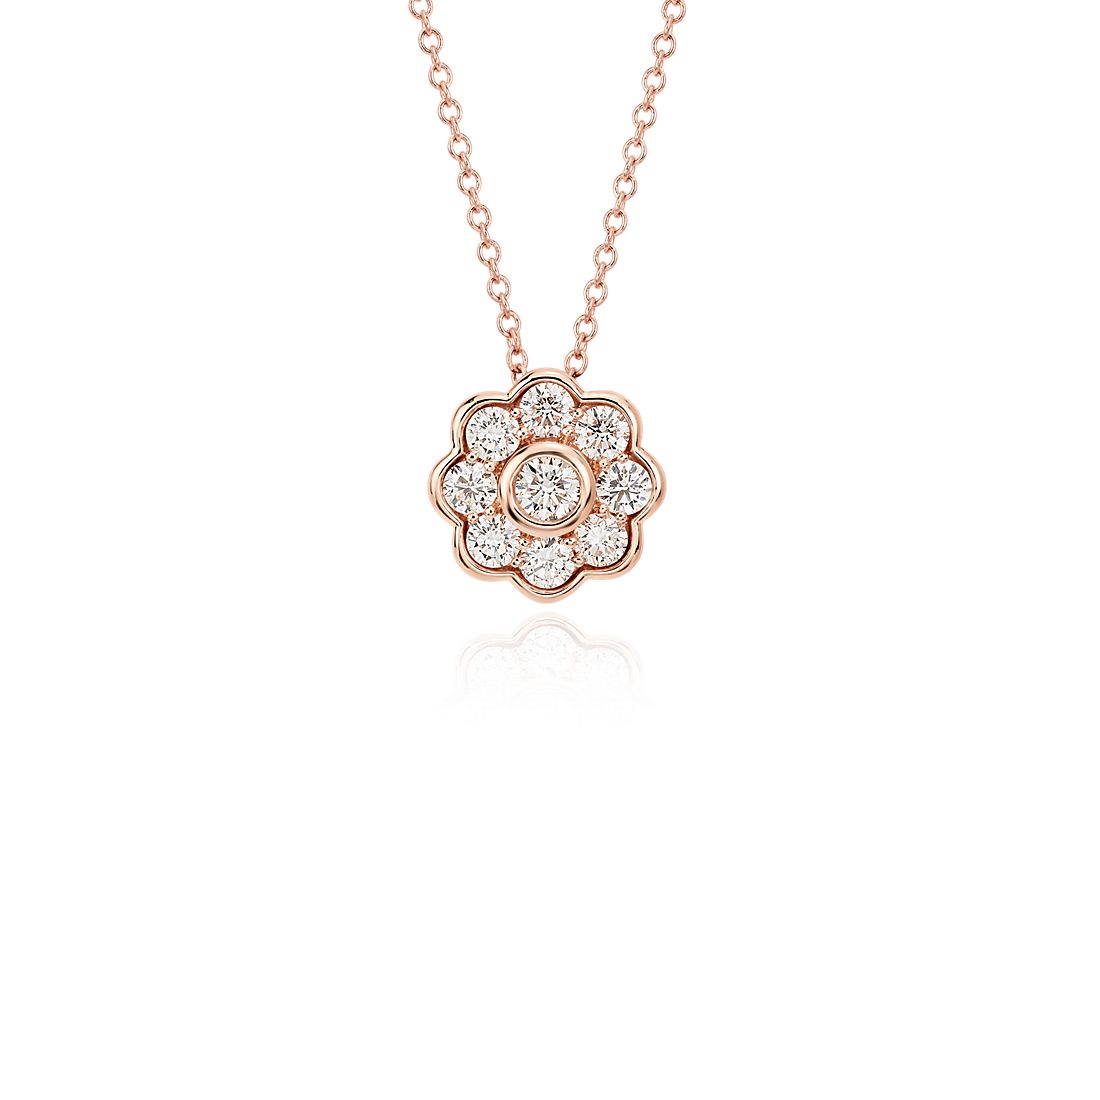 Blue Nile Studio Diamond Floral Pendant in 18k Rose Gold (3/4 ct. tw.)